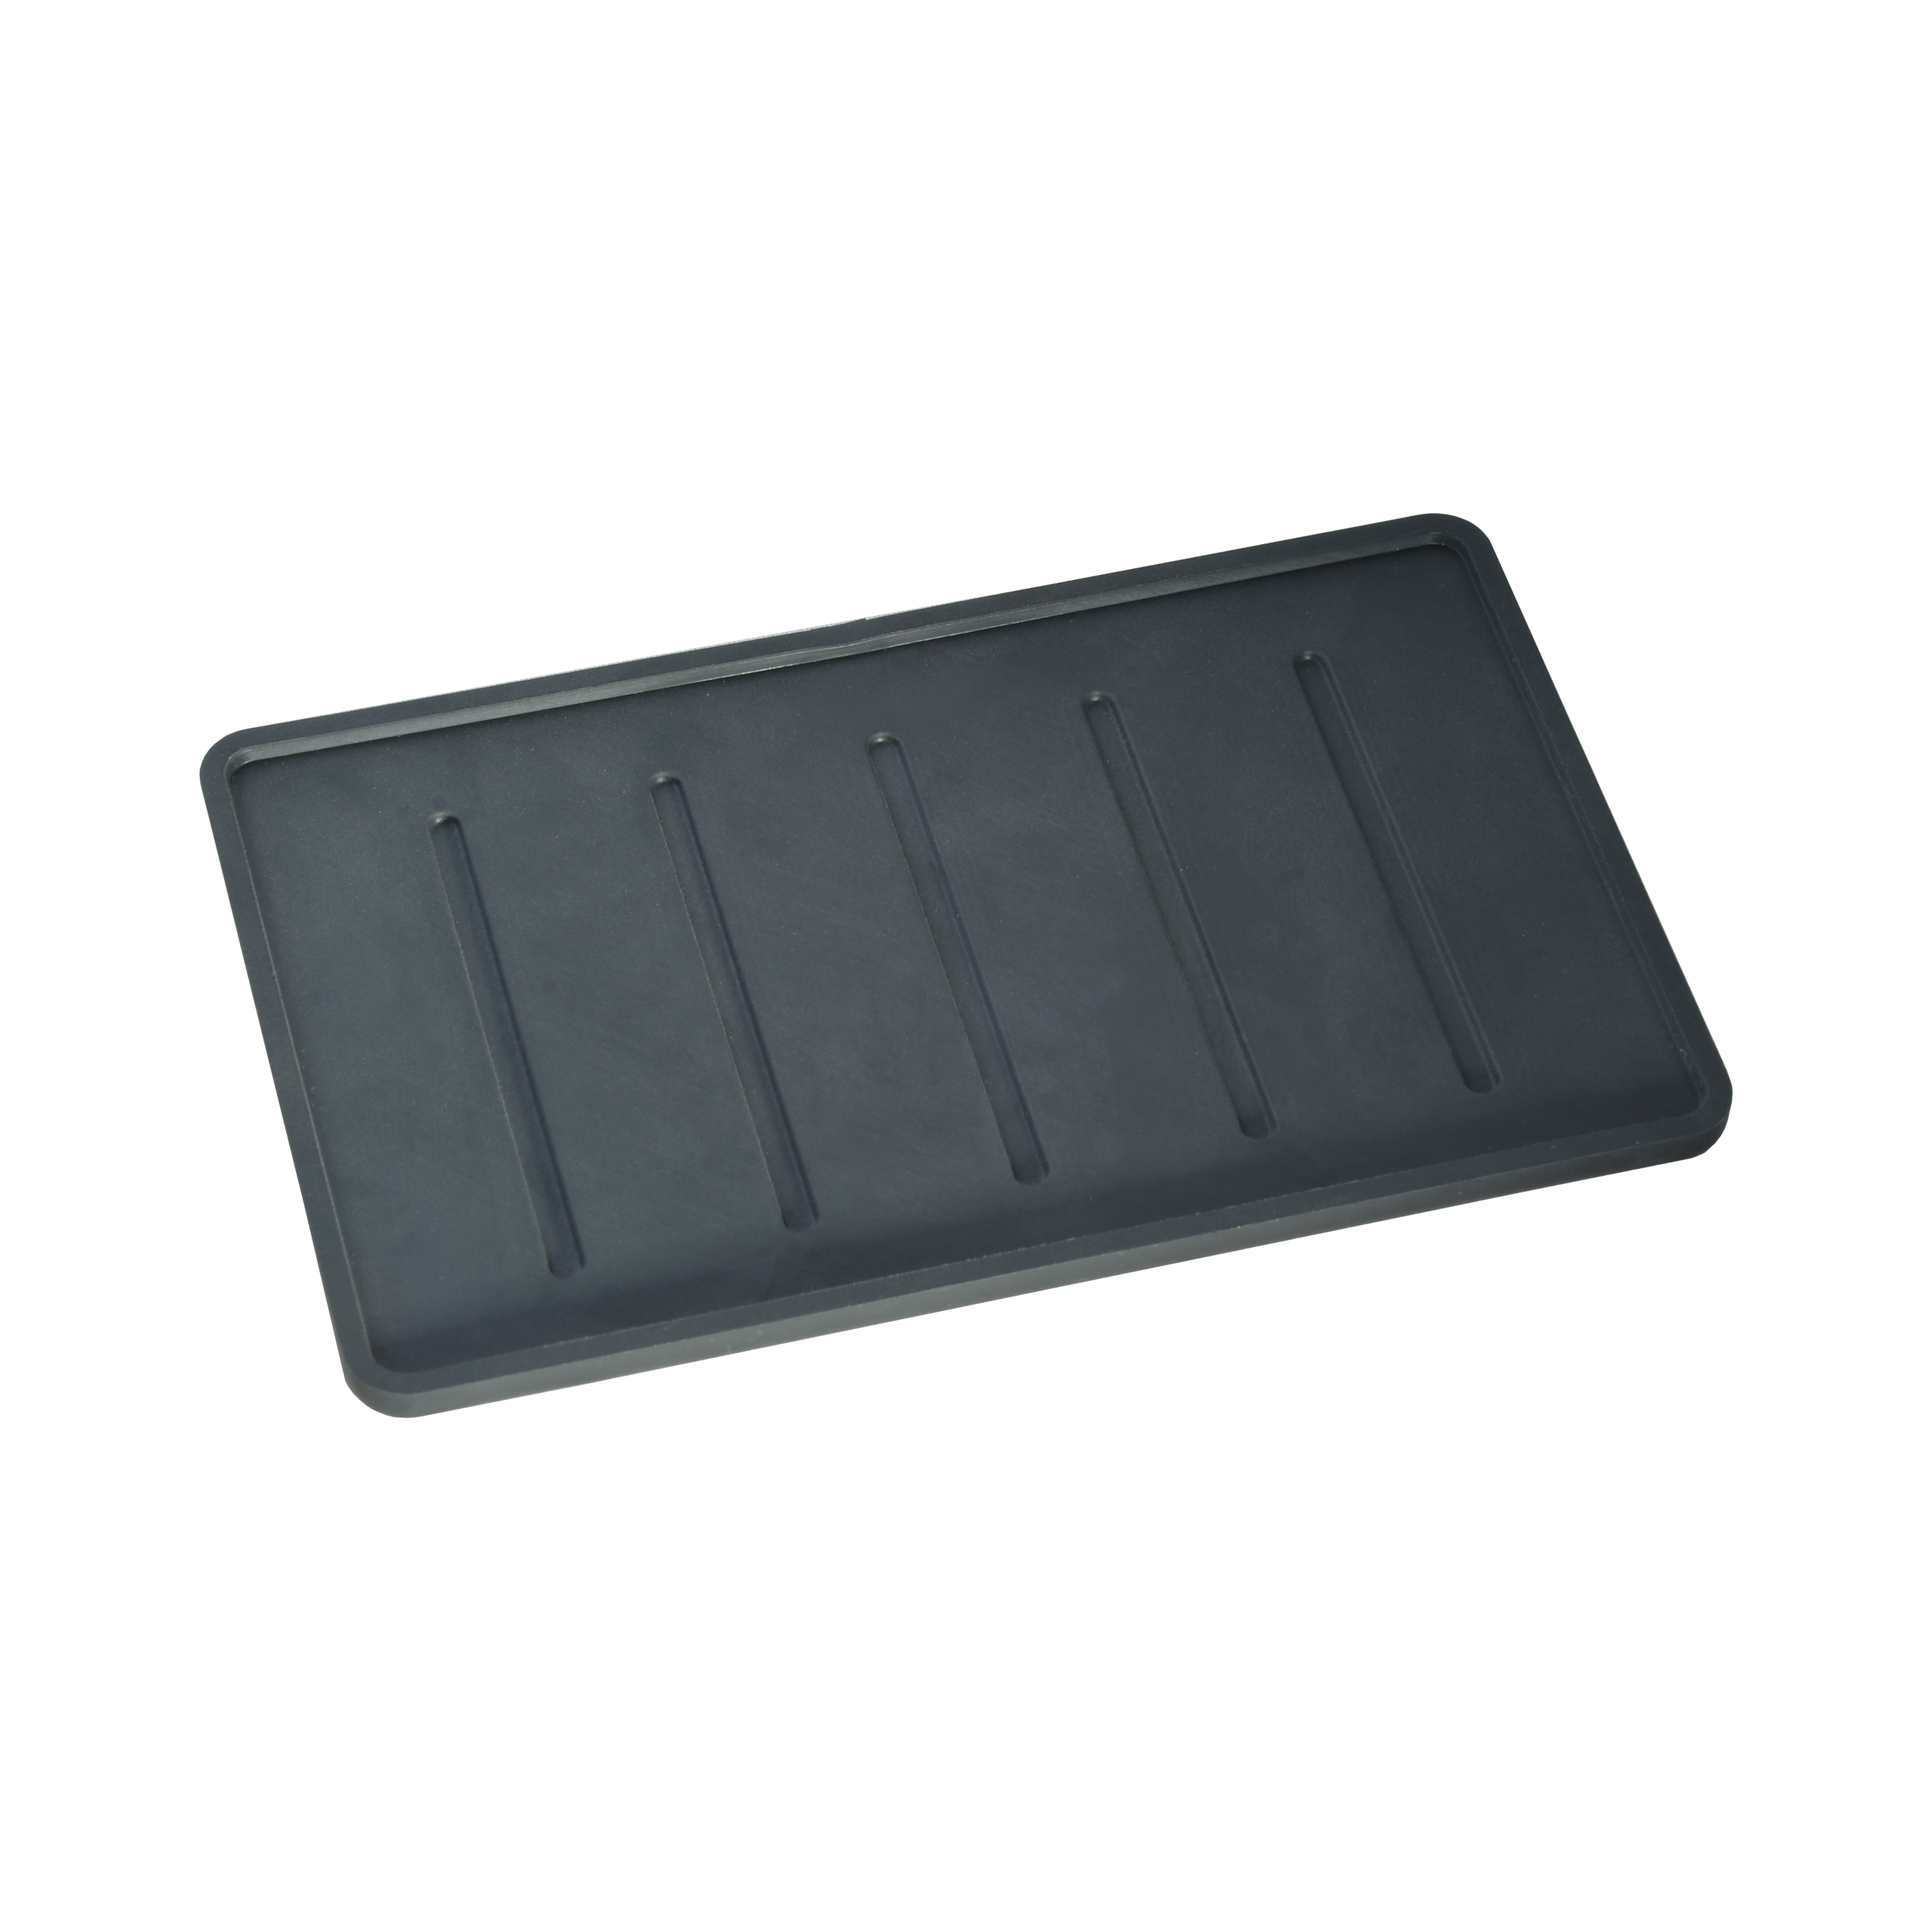 Pack of 1] MatRx Automotive Floor Mat Universal Heel Protector Pad wi